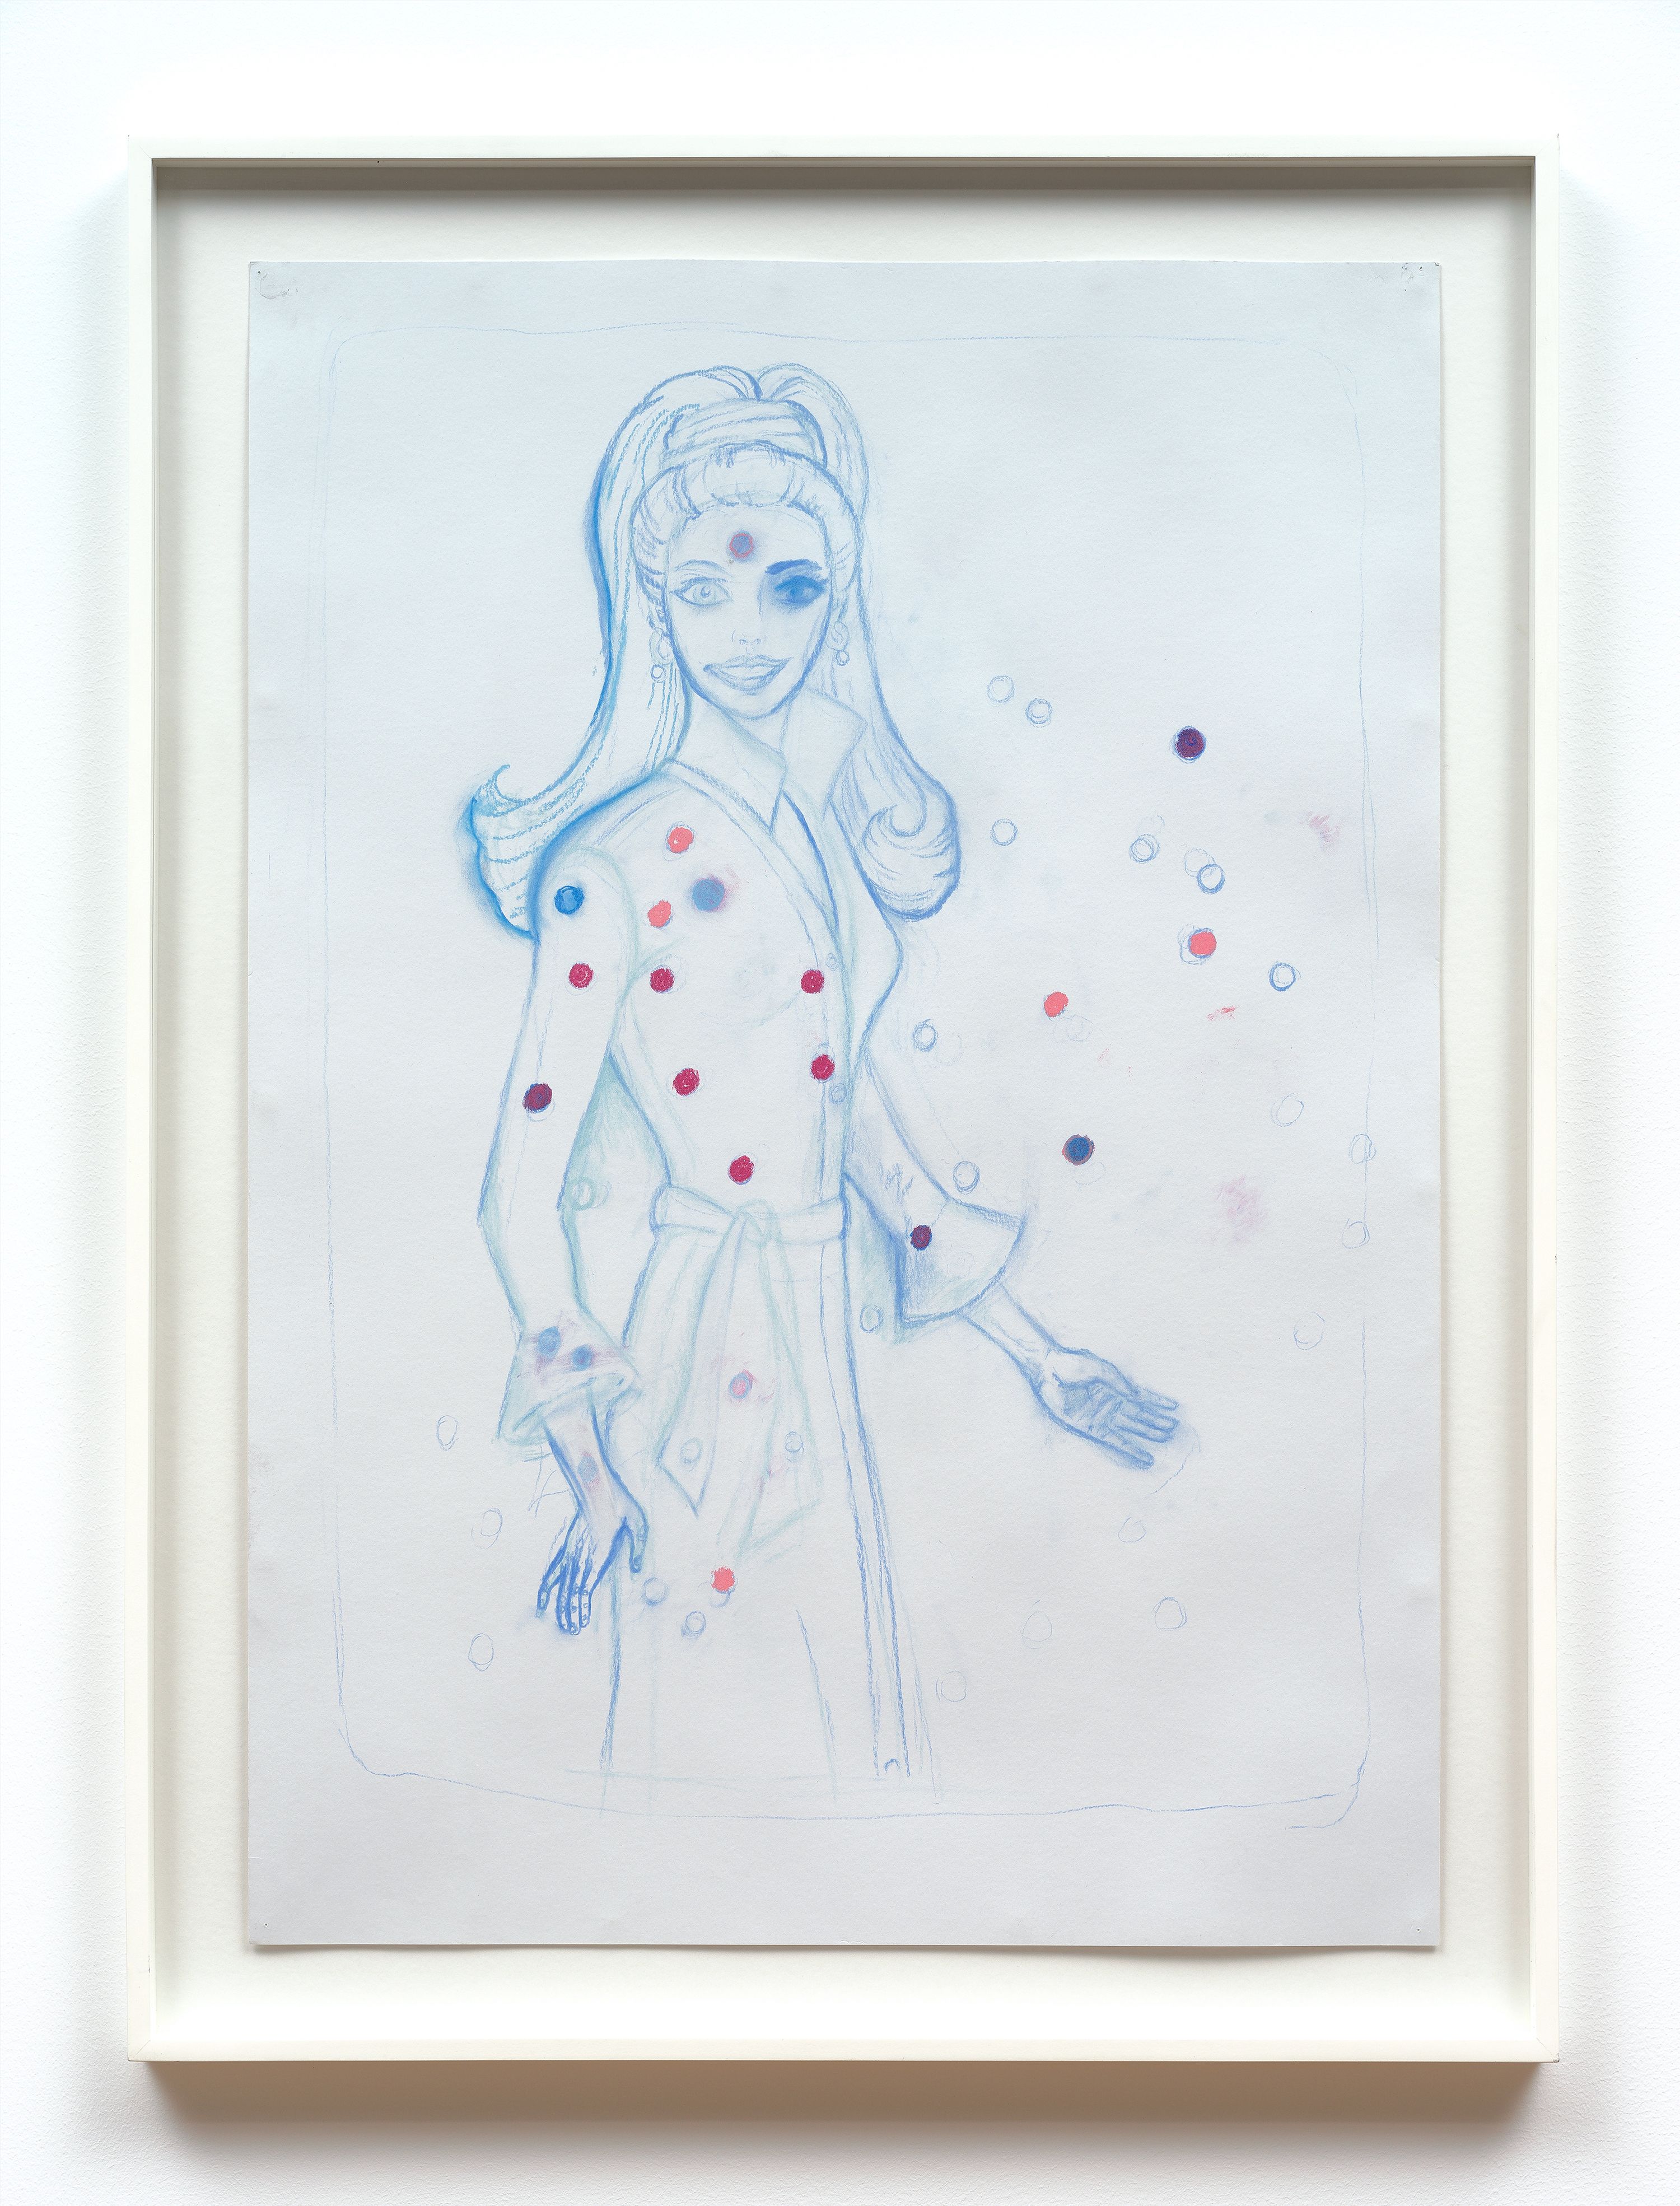 Ellen Cantor, TBT, no date, pencil on paper, 32 x 22 in. (81.28 x 55.88 cm)